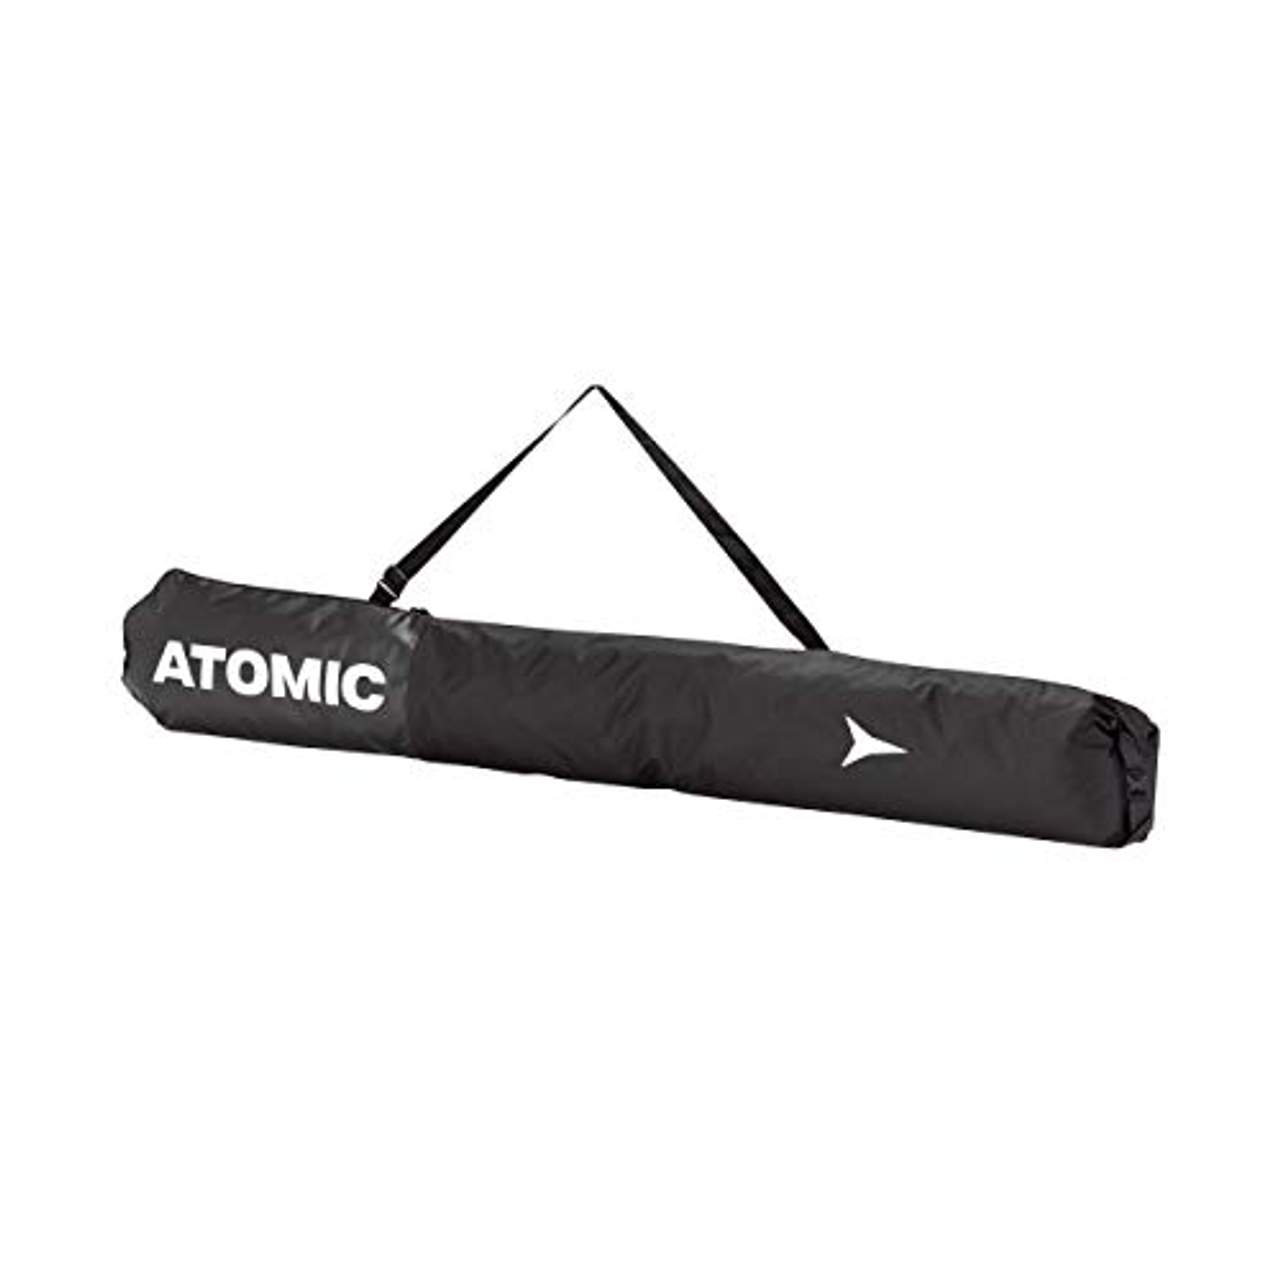 Atomic SKI Sleeve Skisack Skitasche Collection 2020